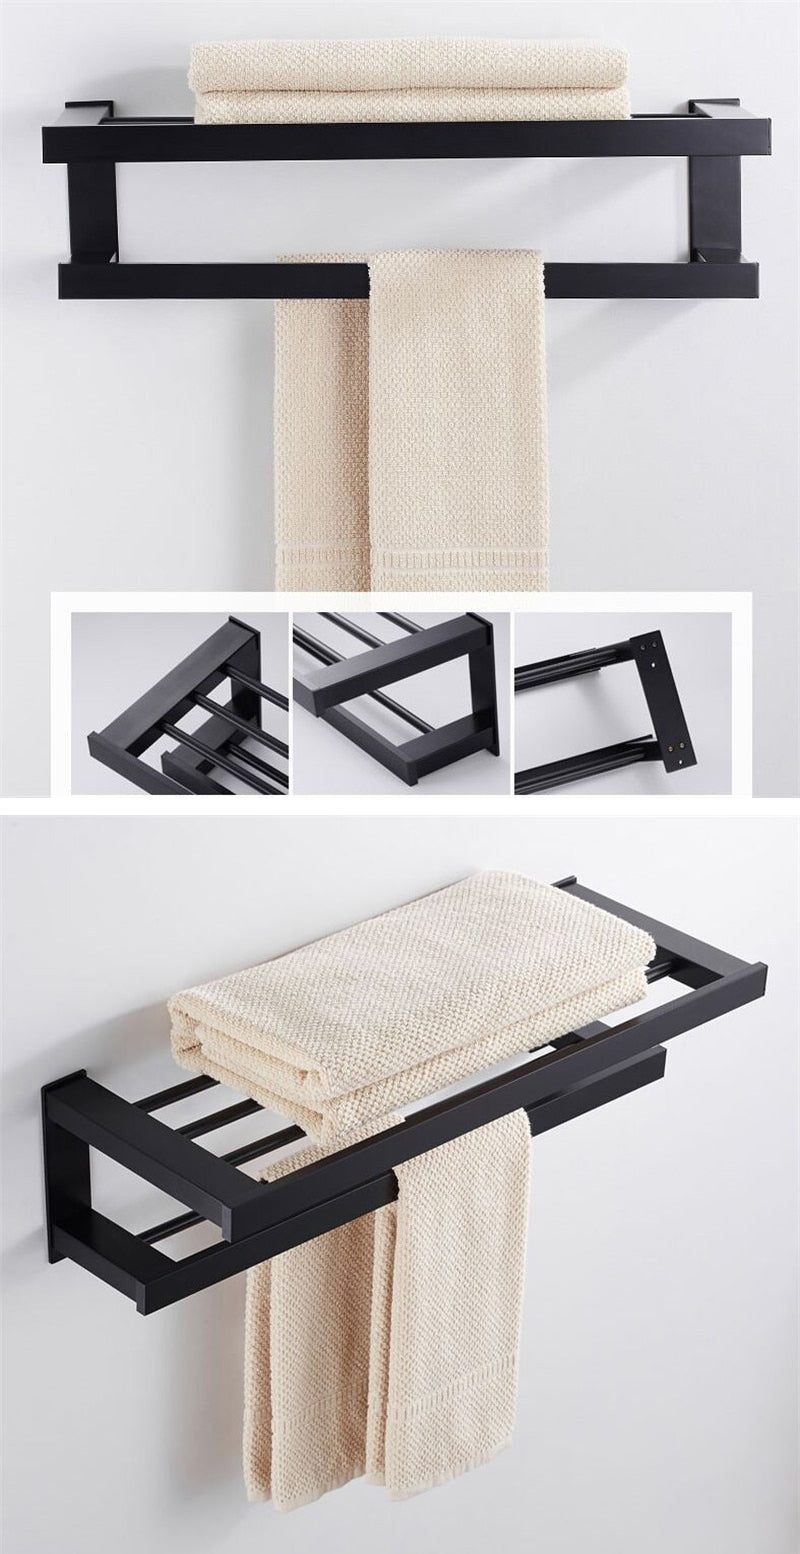 Matt Black Bathroom Towel Rack Wall Mounted Shelf With Twin Tier Towel Rails Modern Angular Design With Polished Aluminium Finish Premium Bathroom Hardware